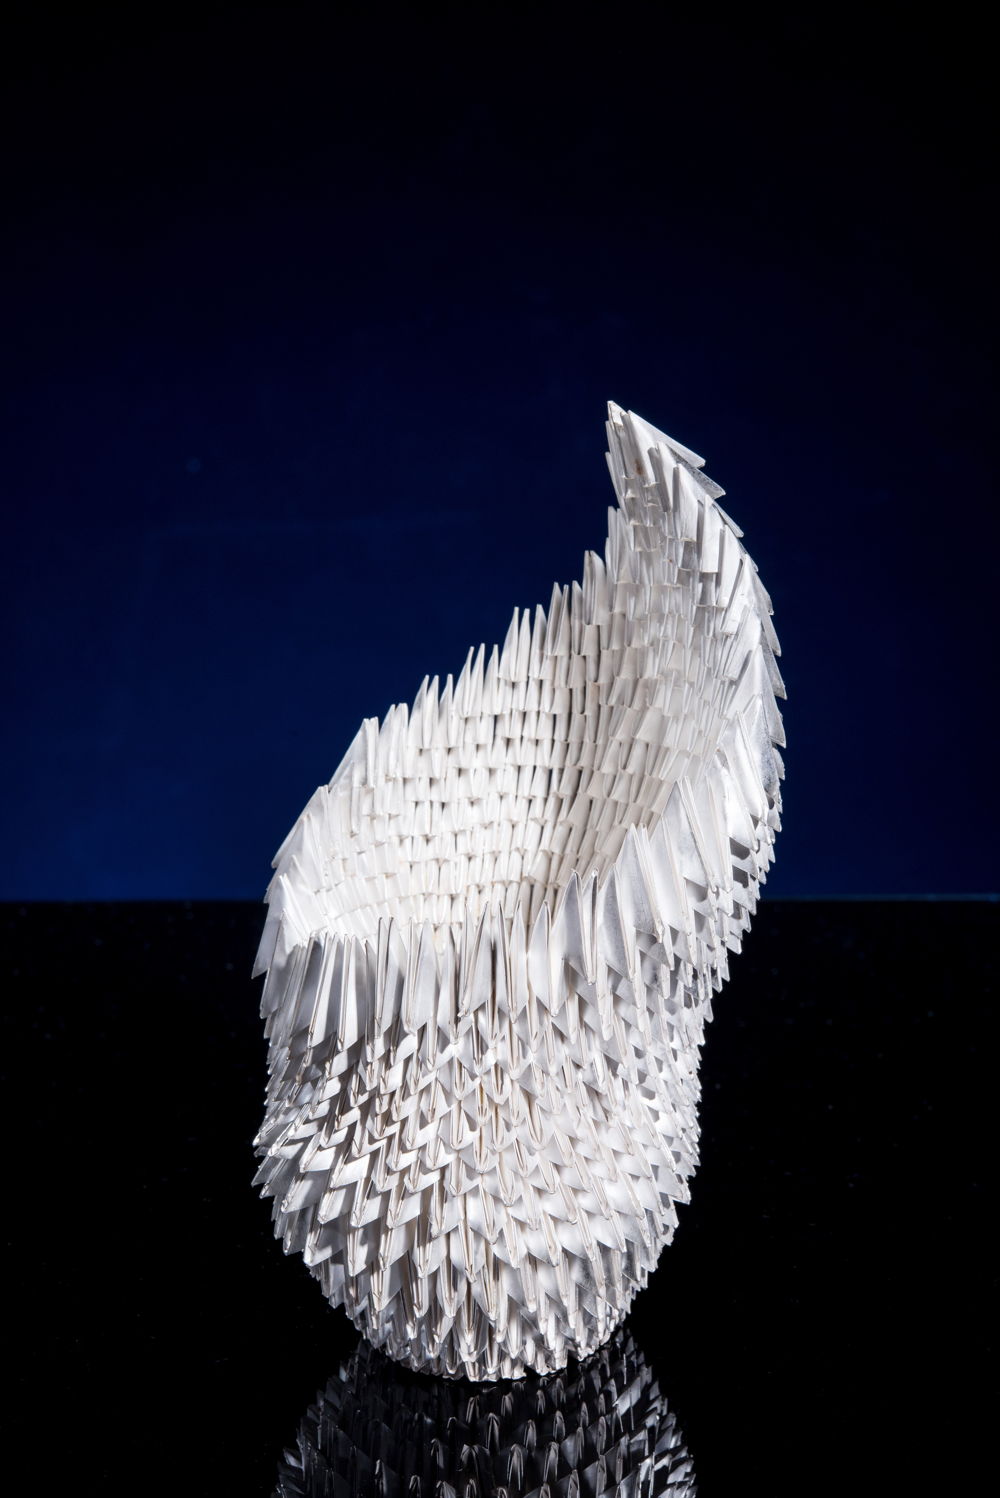 The dancing of emptiness, origami uit zilver, Tzu-Hsiang Lin (c) Tzu-Hsiang Lin